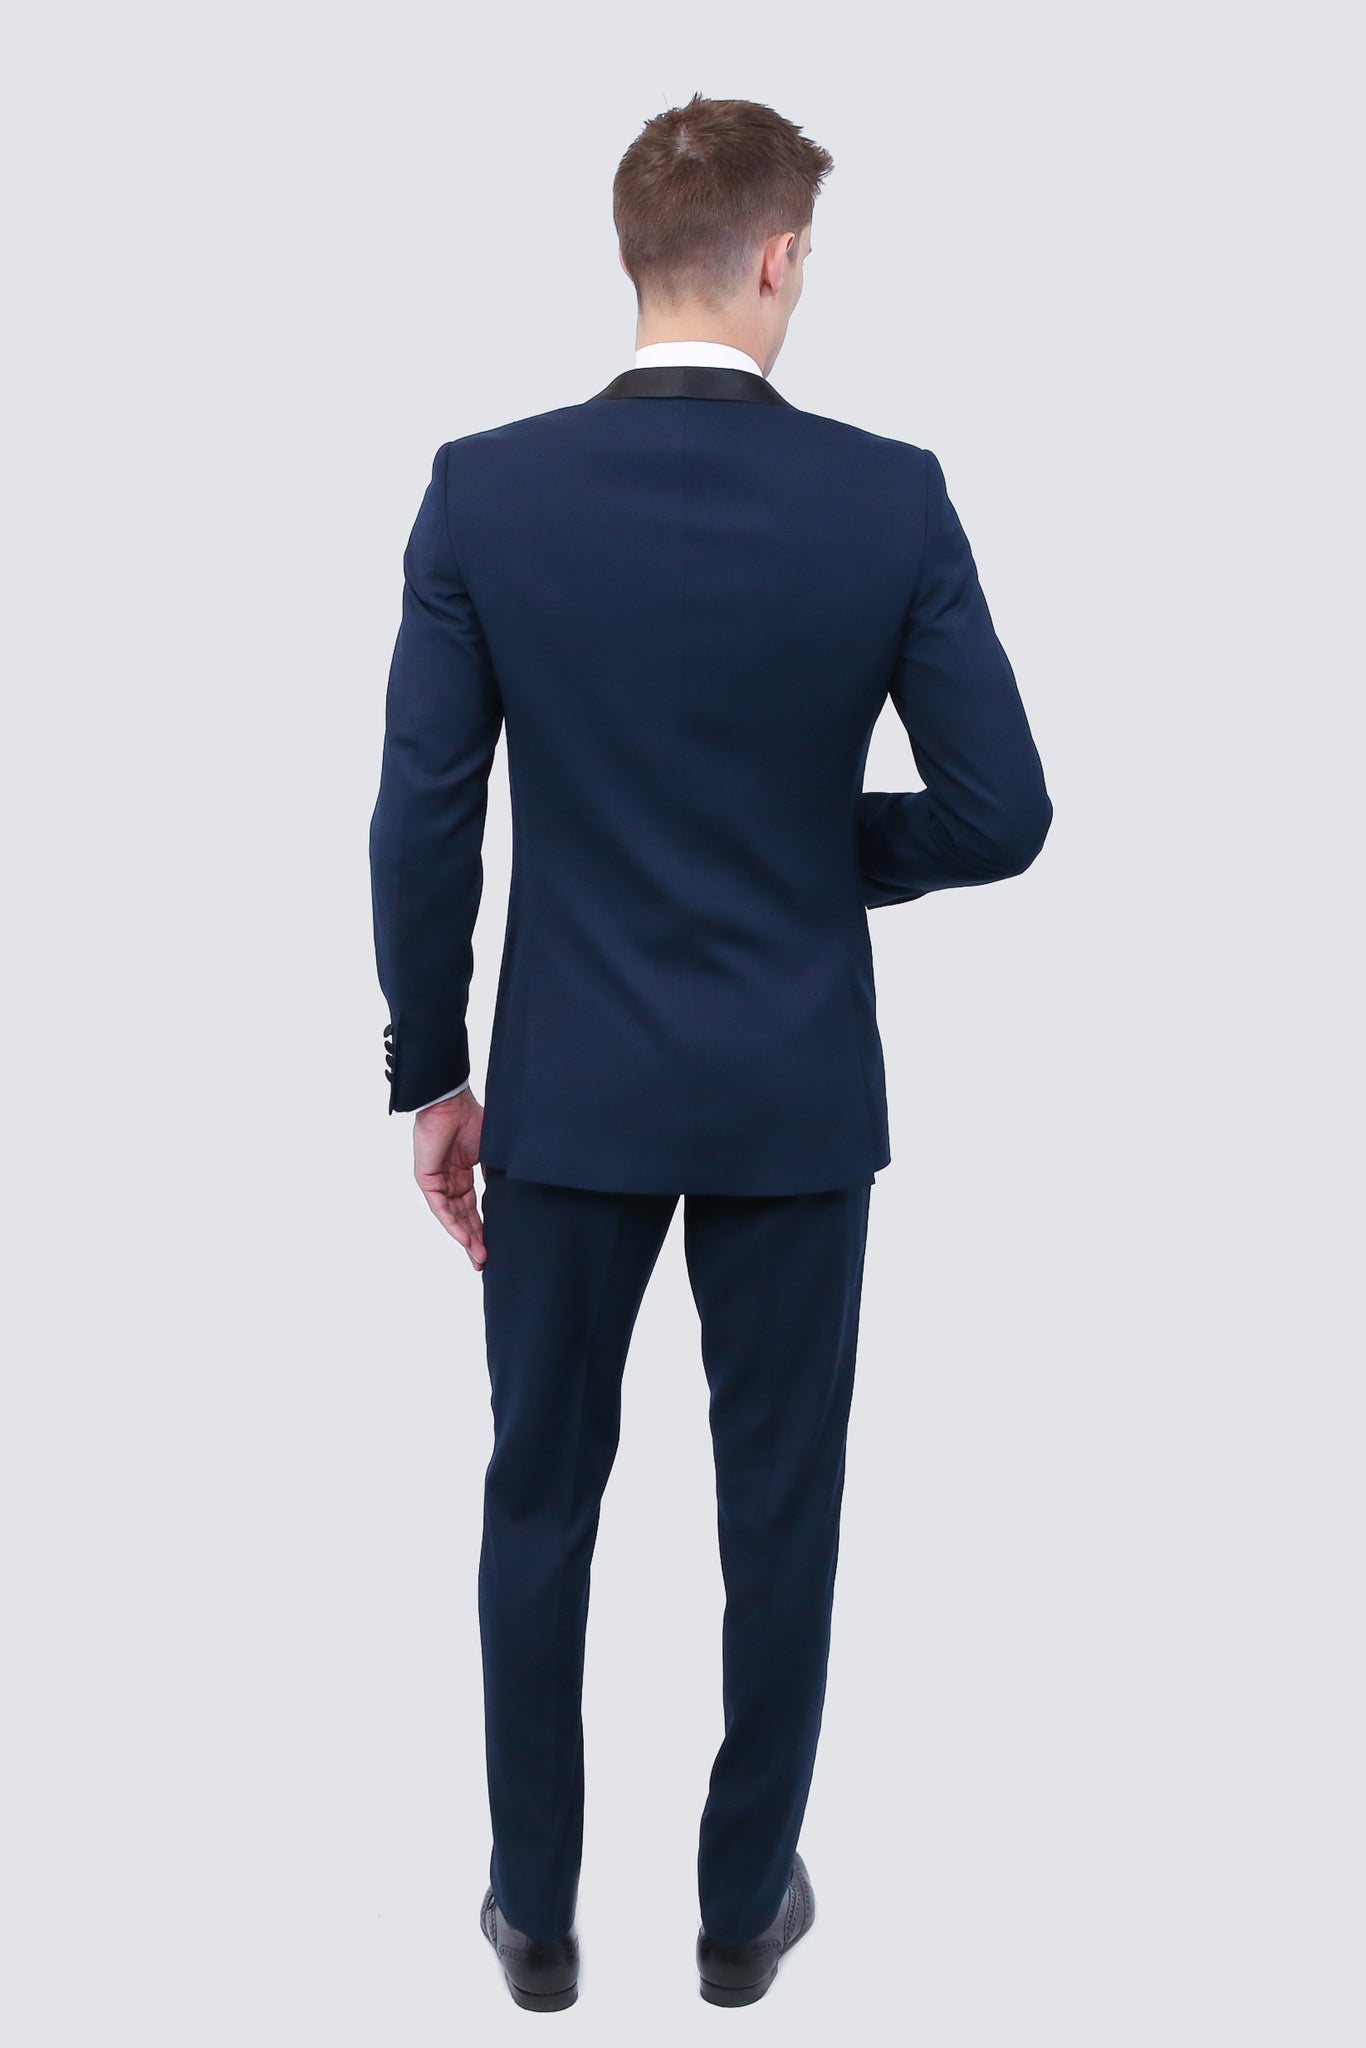 Tailor's Stretch Blend Navy Blue Tuxedo | Modern or Slim Fit - My Men's Shop